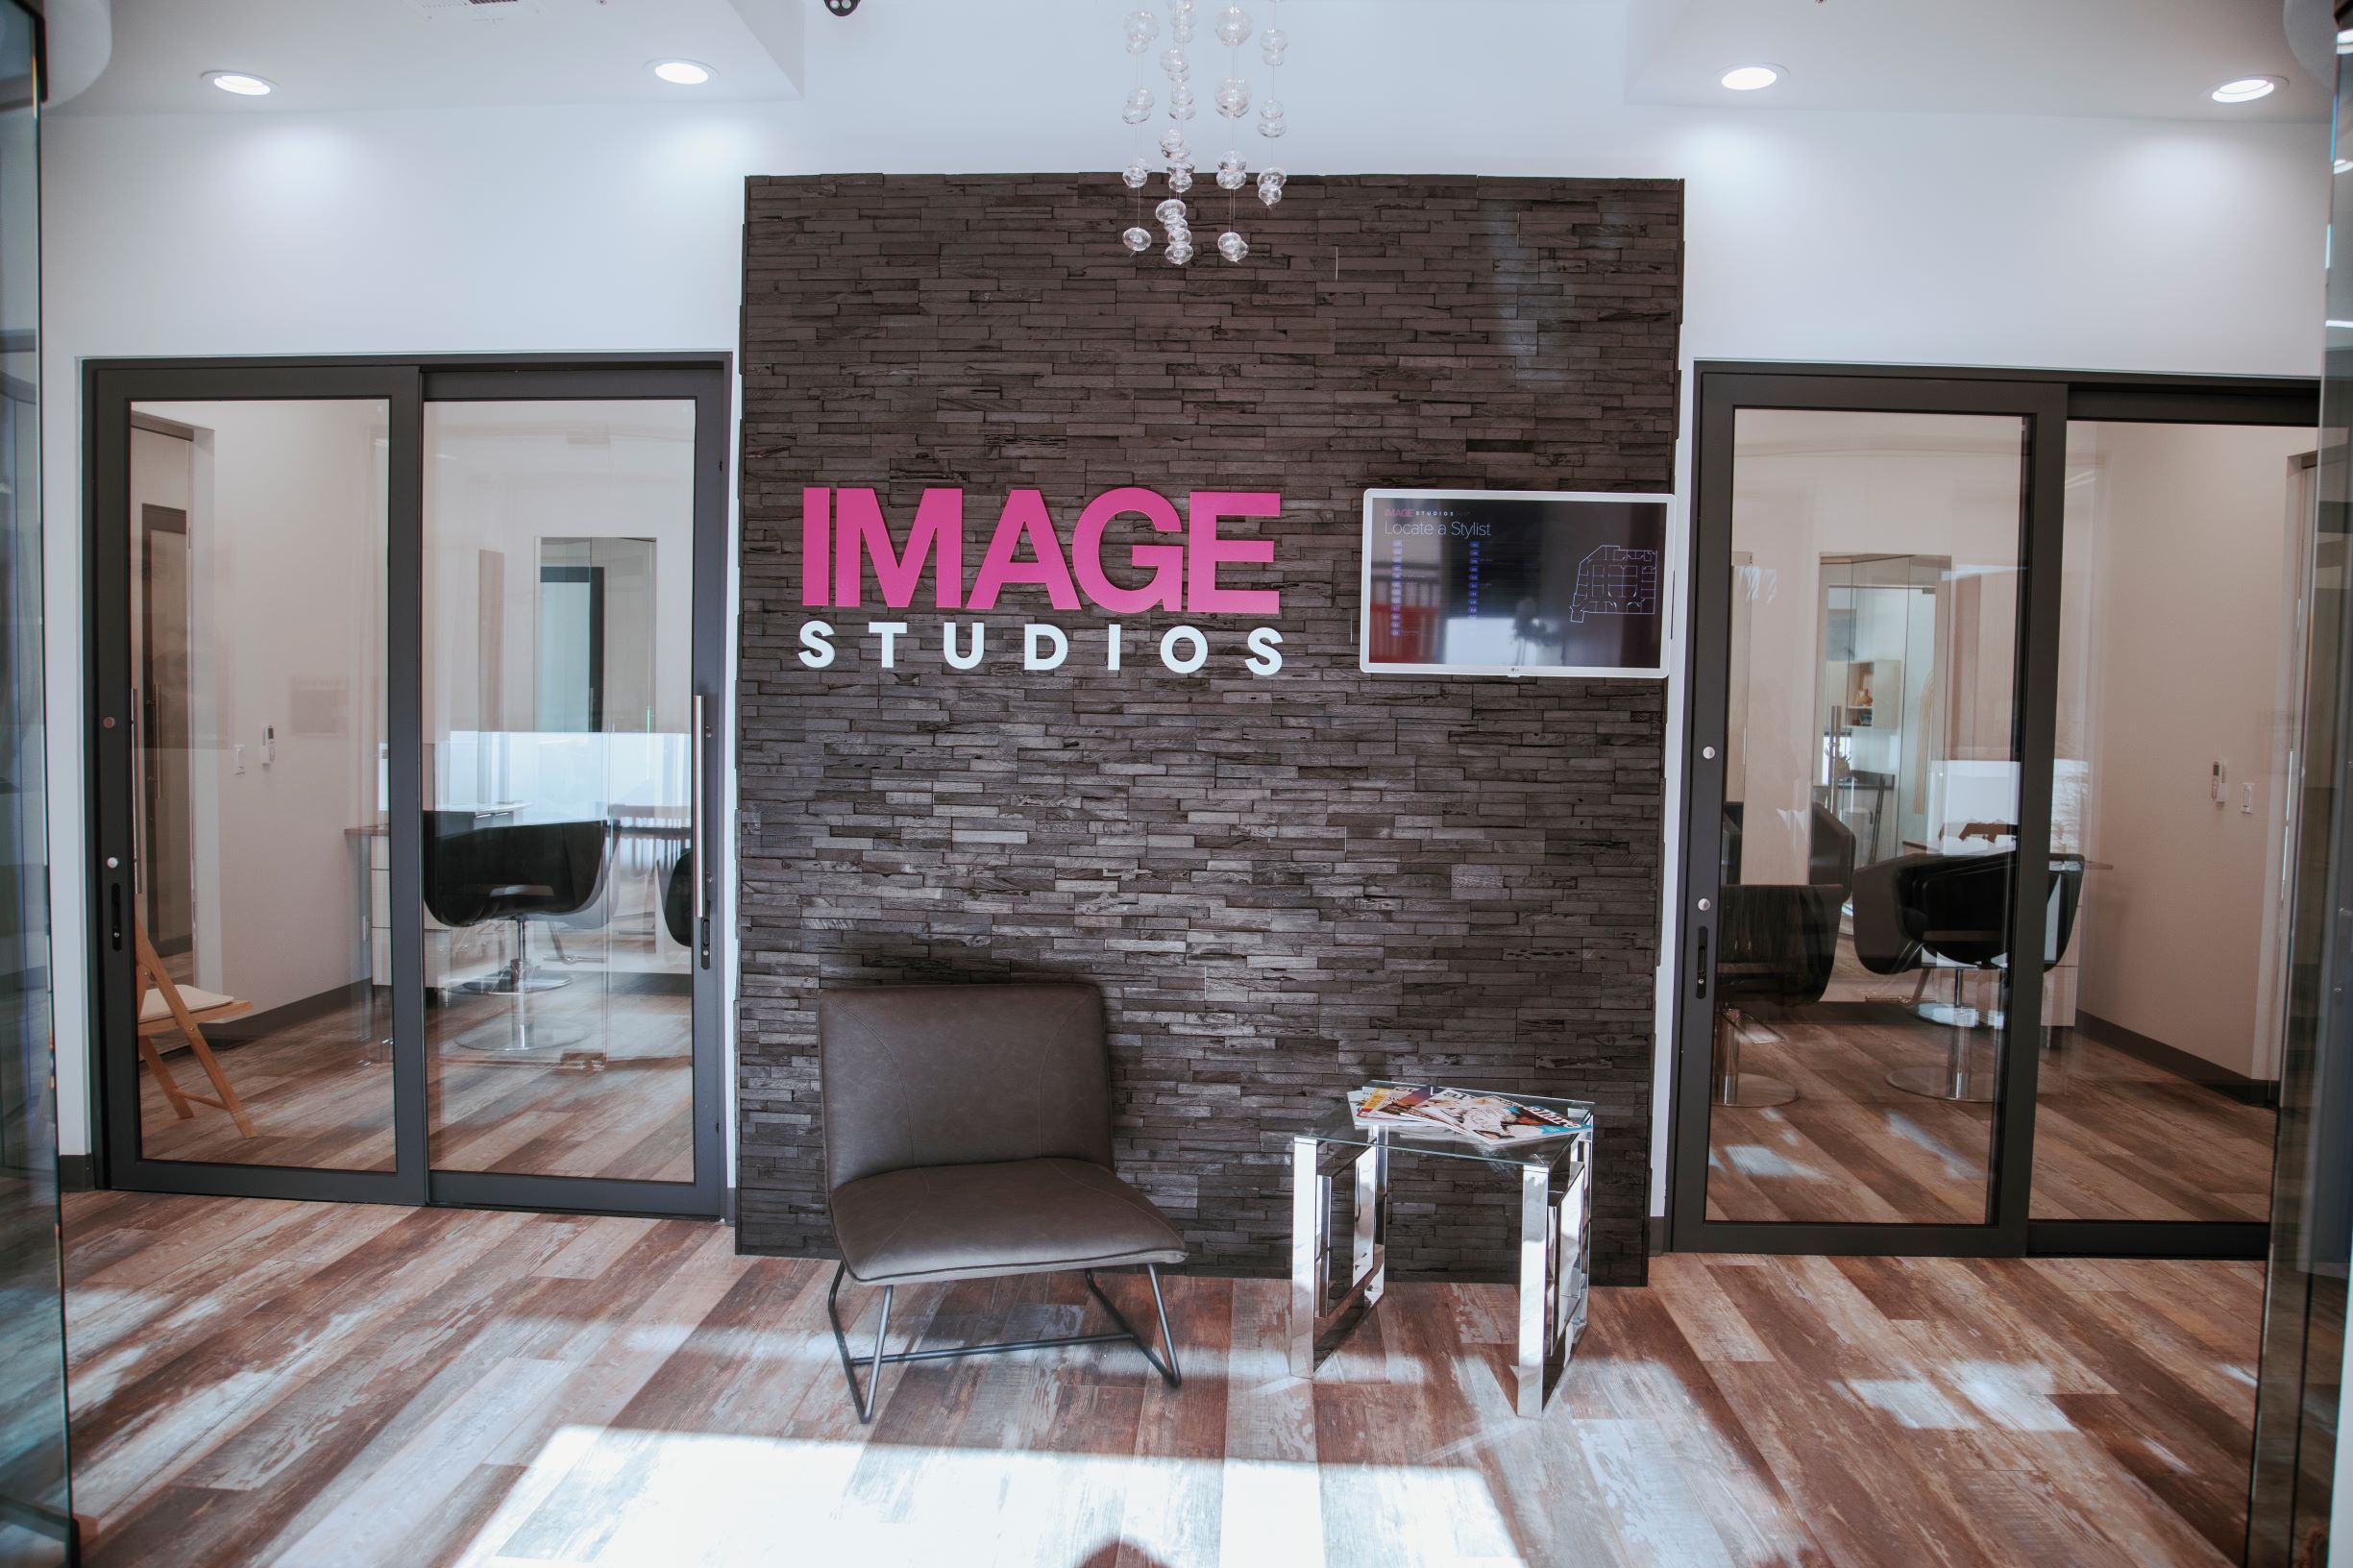 IMAGE Studios® Opens in San Clemente, CA!